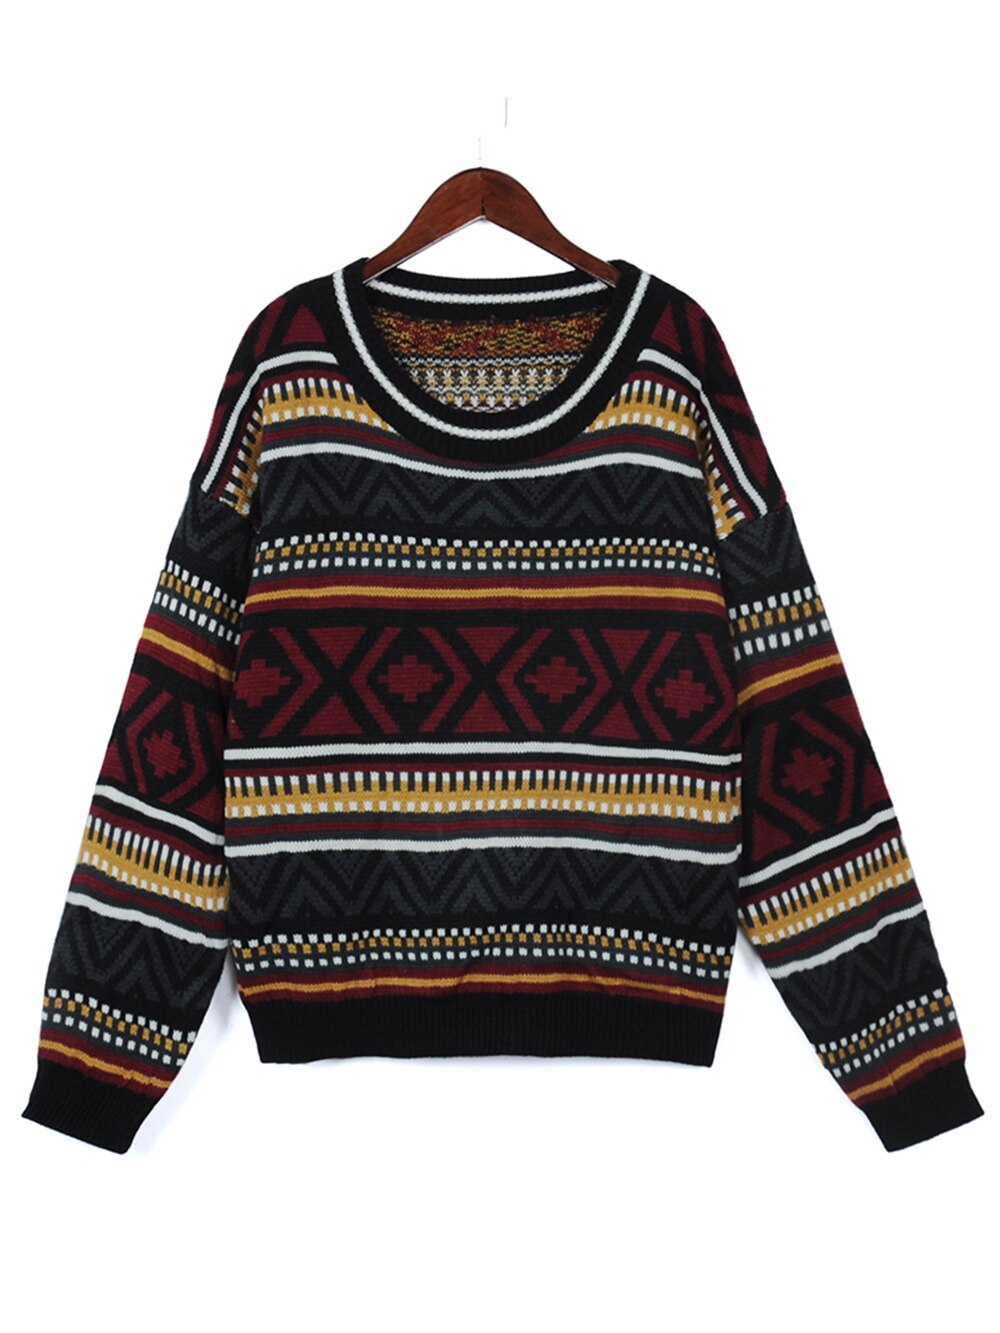 Vintage Aesthetic Warm Sweater